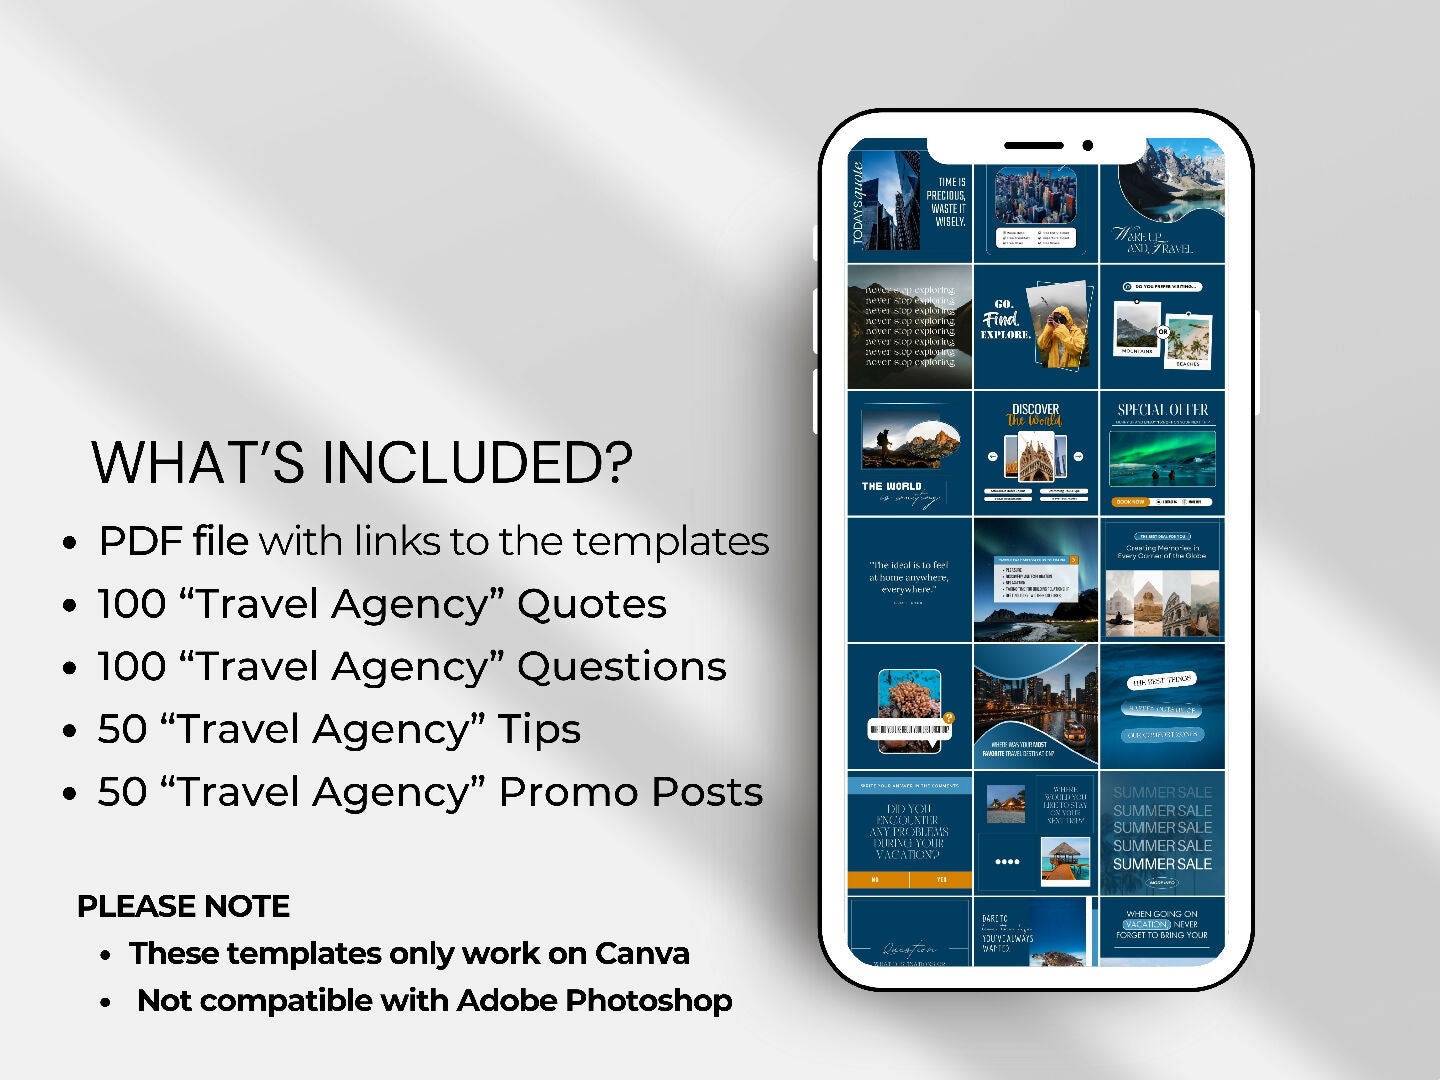 300 Travel Agency Templates for Social Media